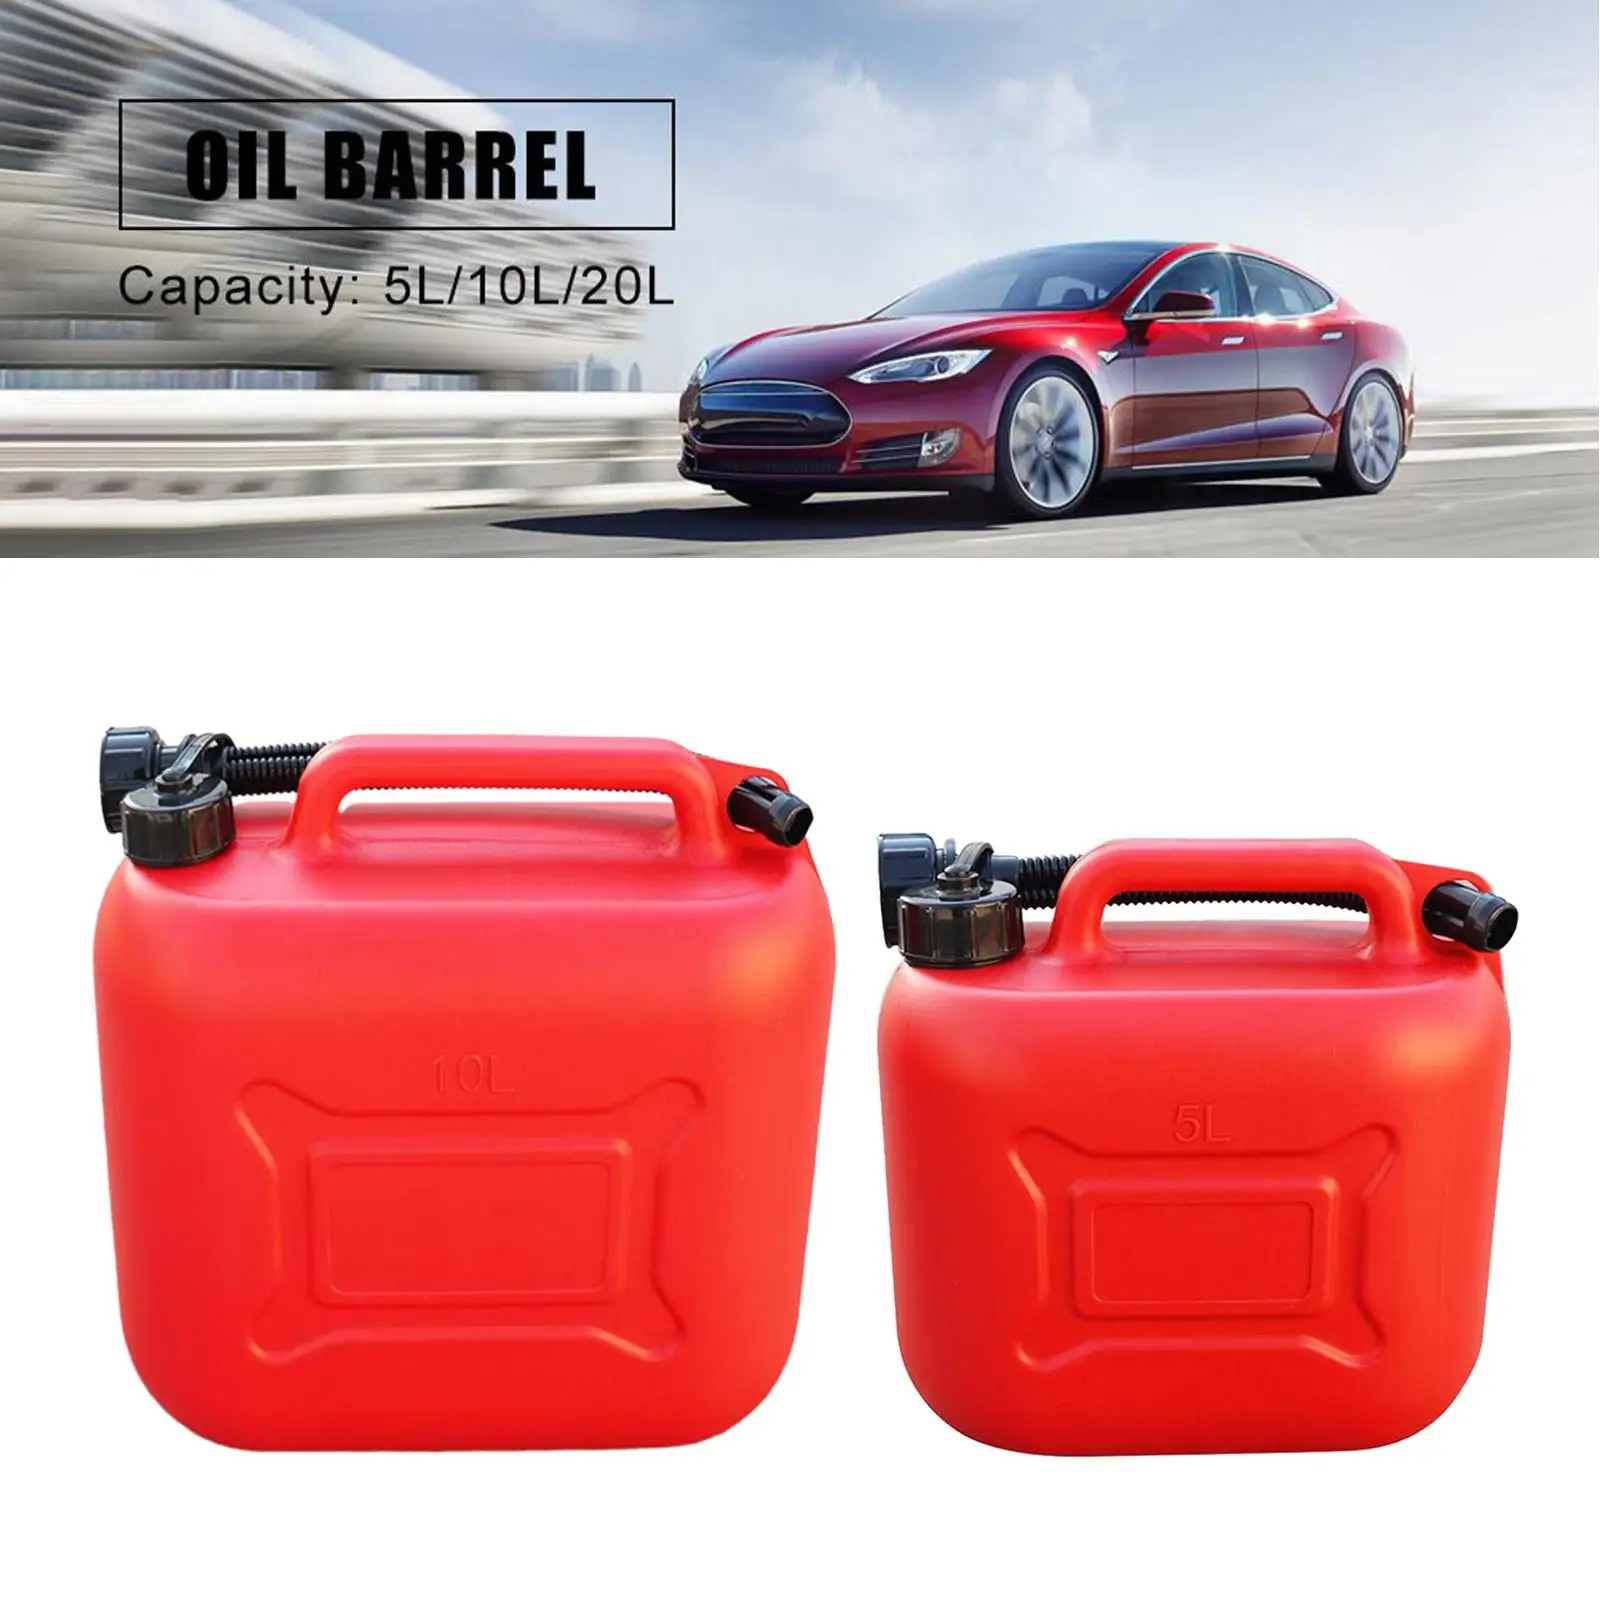 Tank, Portable Gas Fuel Tank Spare Plastic Petrol Tanks Gasoline Oil Container Fuel-jugs